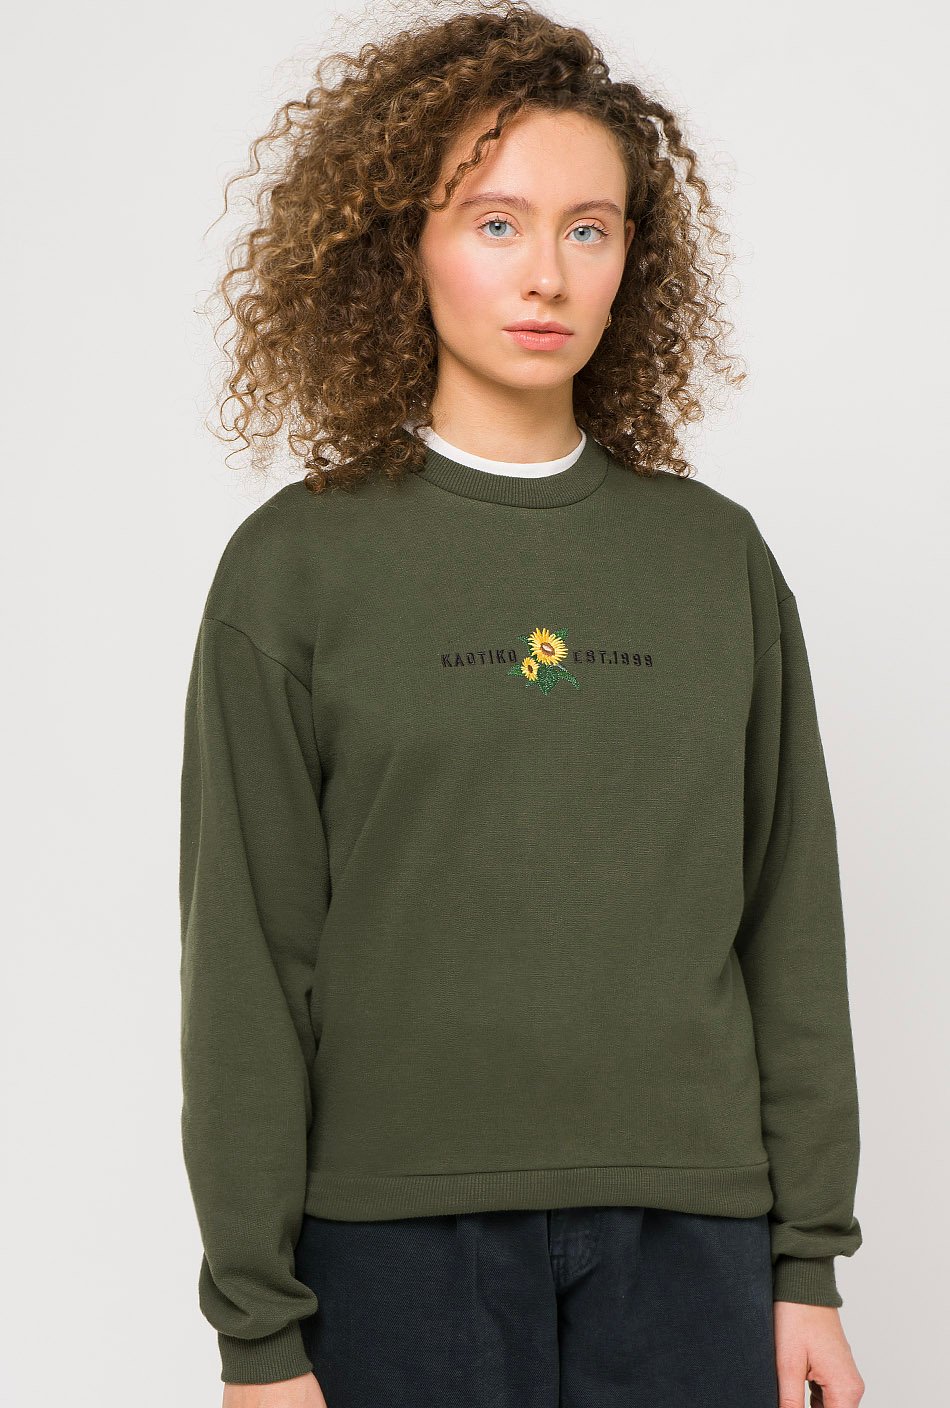 Sunflower Green Sweatshirt